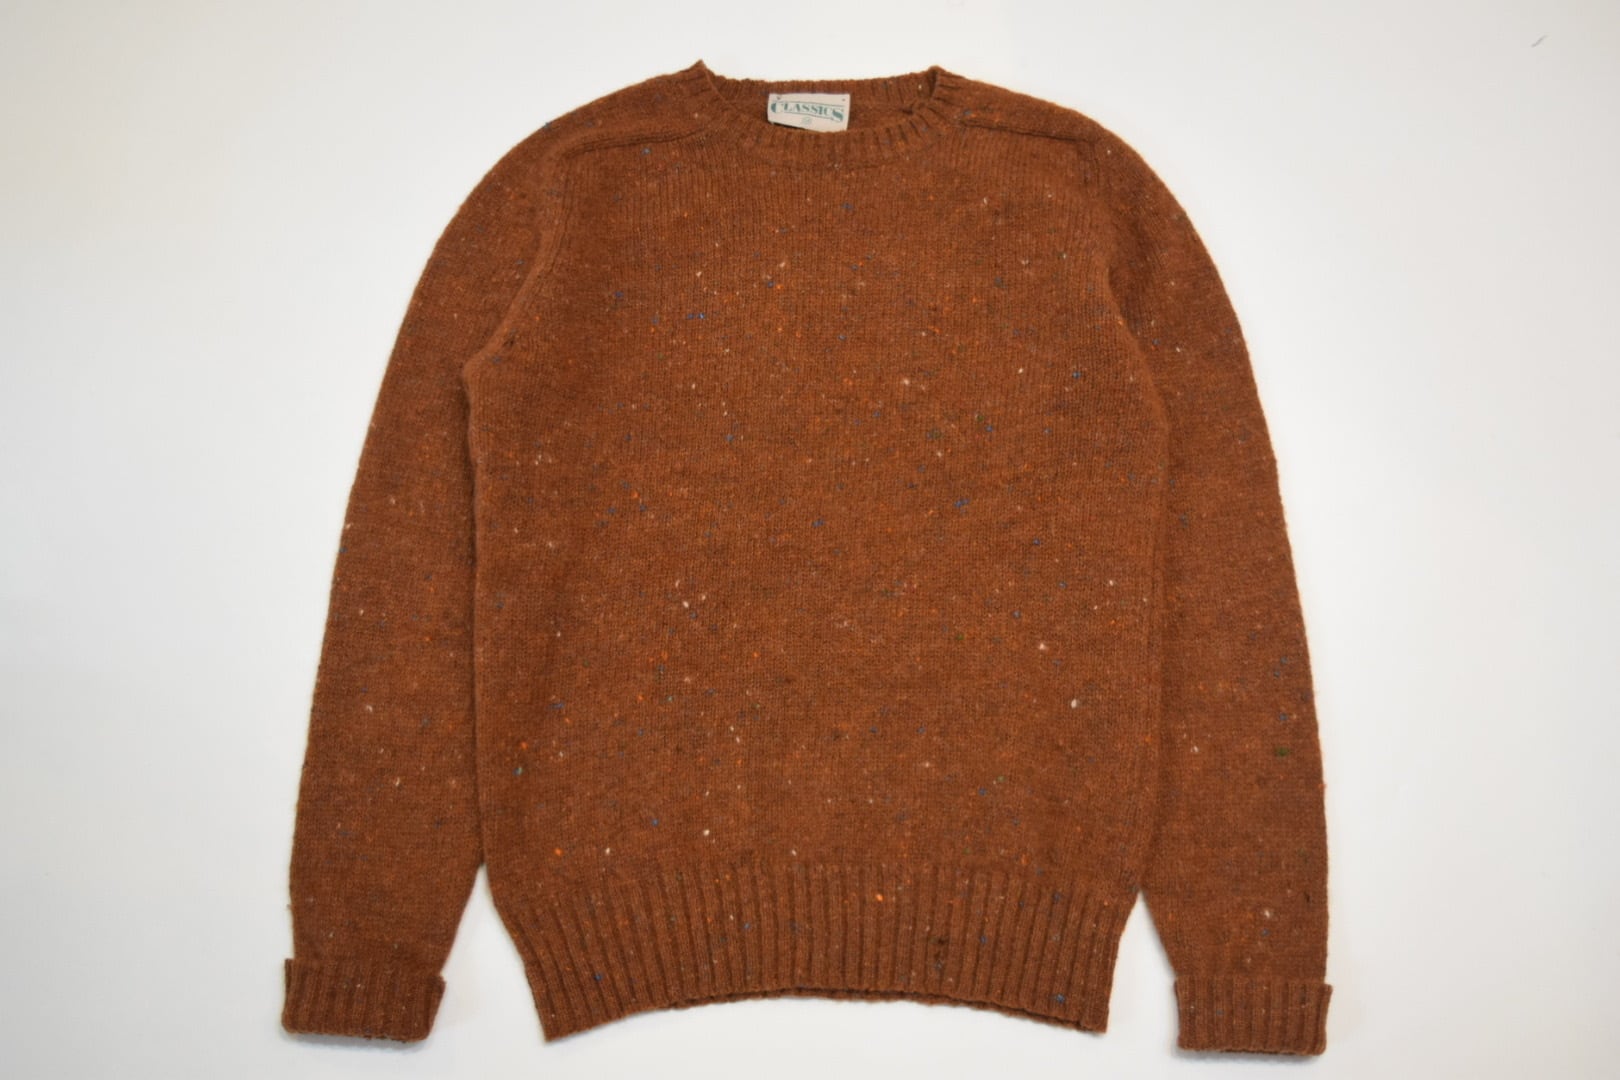 USED 70s "CLASSICS" Shetland Wool Sweater -Medium 01249